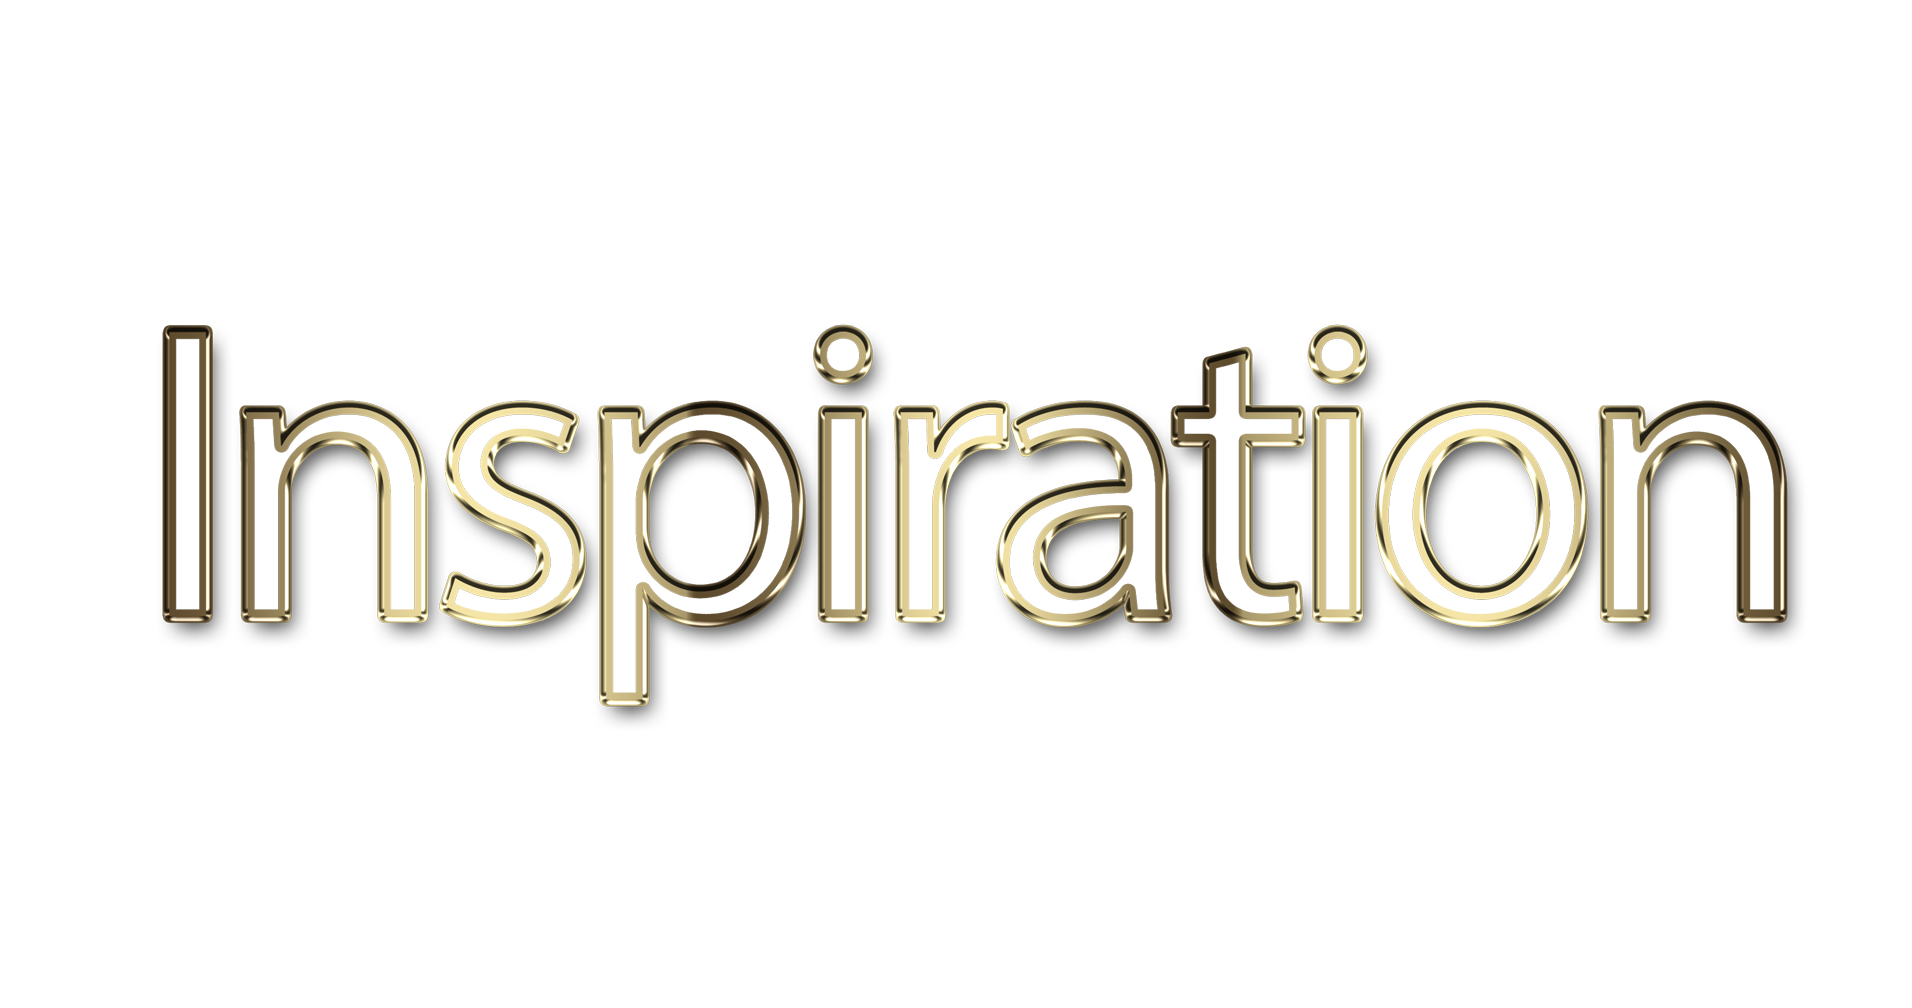 Inspiration png, word Inspiration png, Inspiration word png, Inspiration text png, Inspiration letters png, Inspiration word art typography PNG images, transparent png